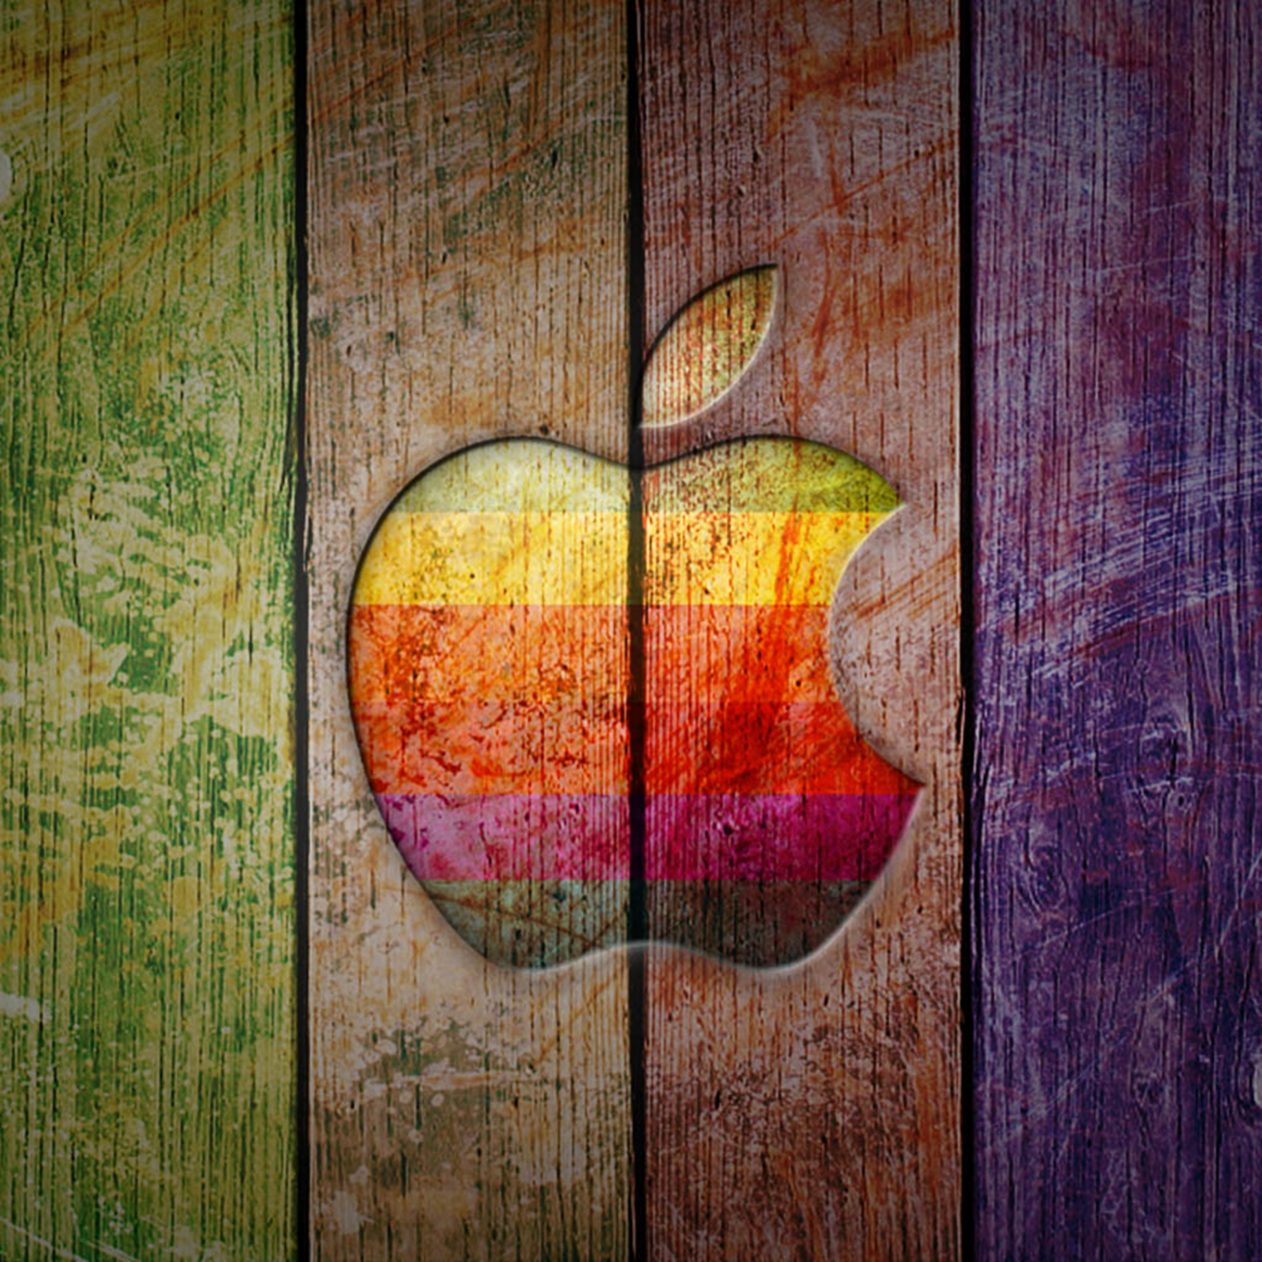 1262x1262 Parallax wallpaper 4k Apple Logo on Colorful Wood Ipad Wallpaper 1262x1262 pixels resolution